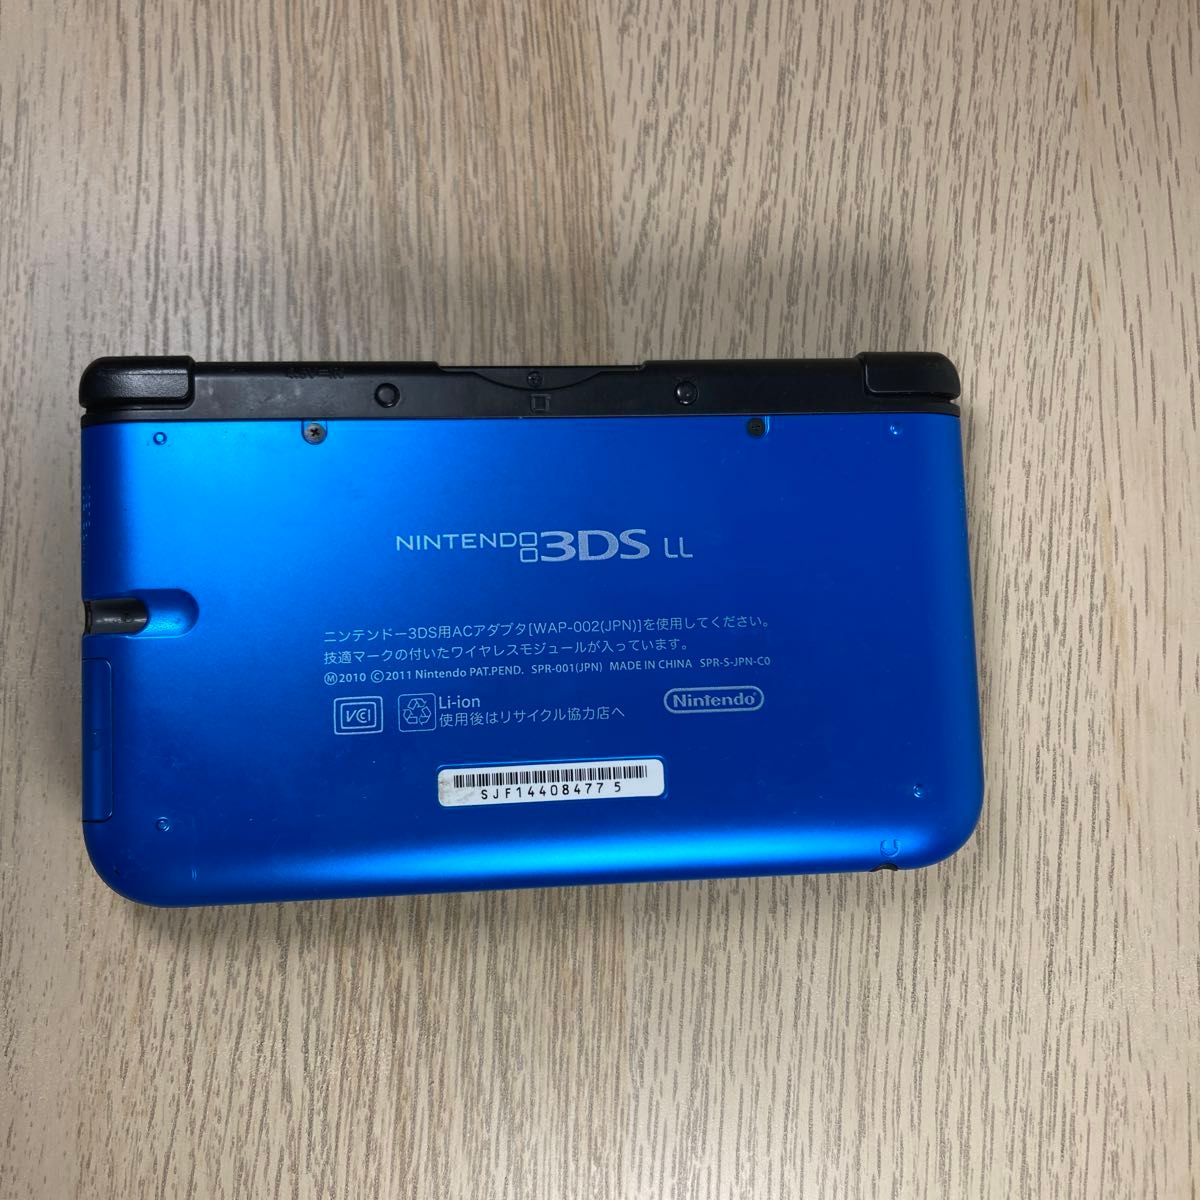 Nintendo 3DSLL本体 ブルー×ブラック ニンテンドー 3DSLL モンスターハンター 3DSソフト4本付 動作品